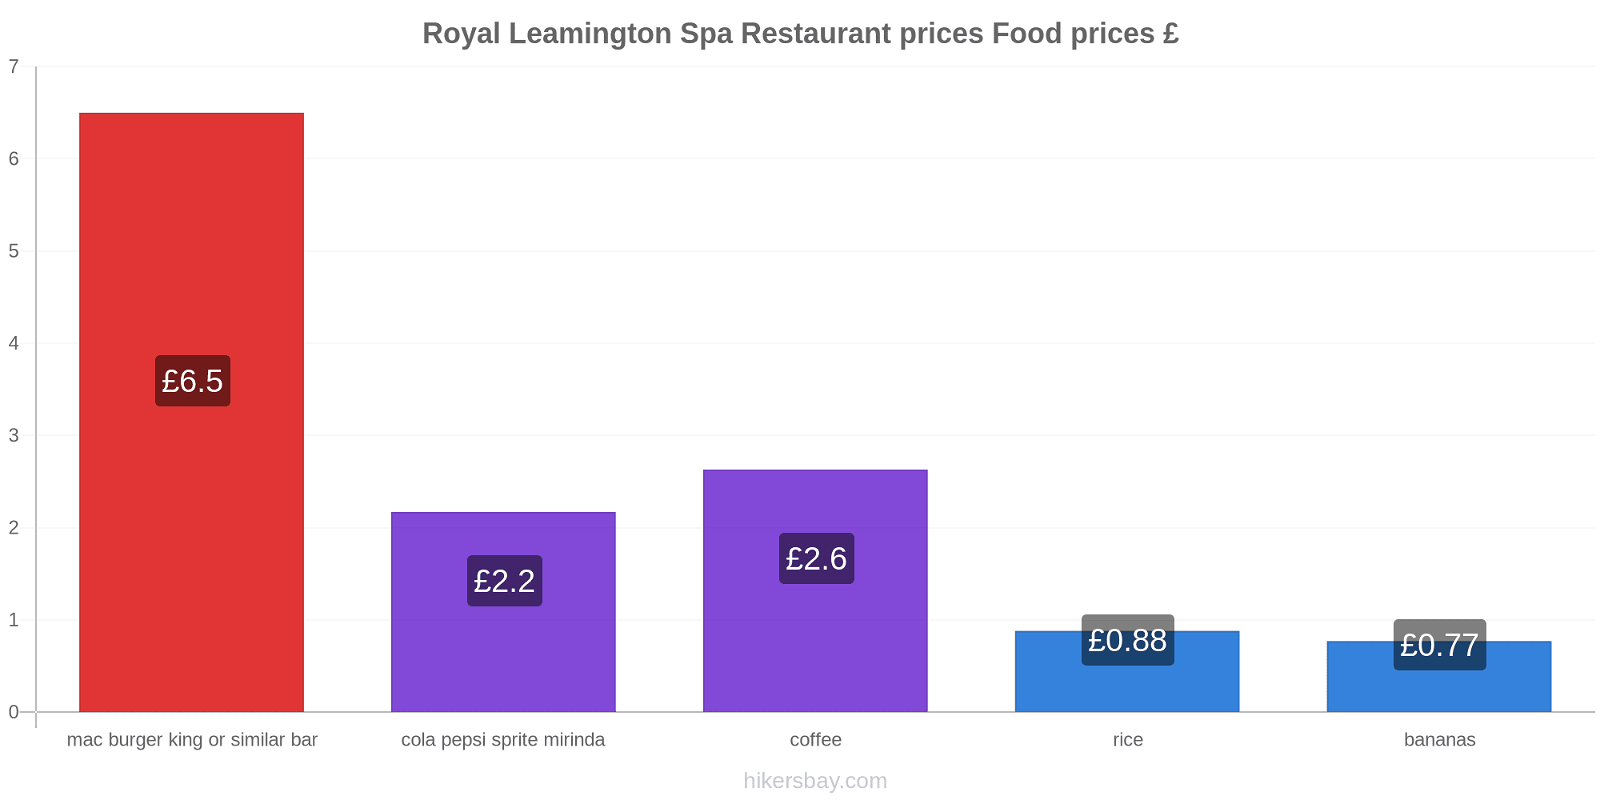 Royal Leamington Spa price changes hikersbay.com